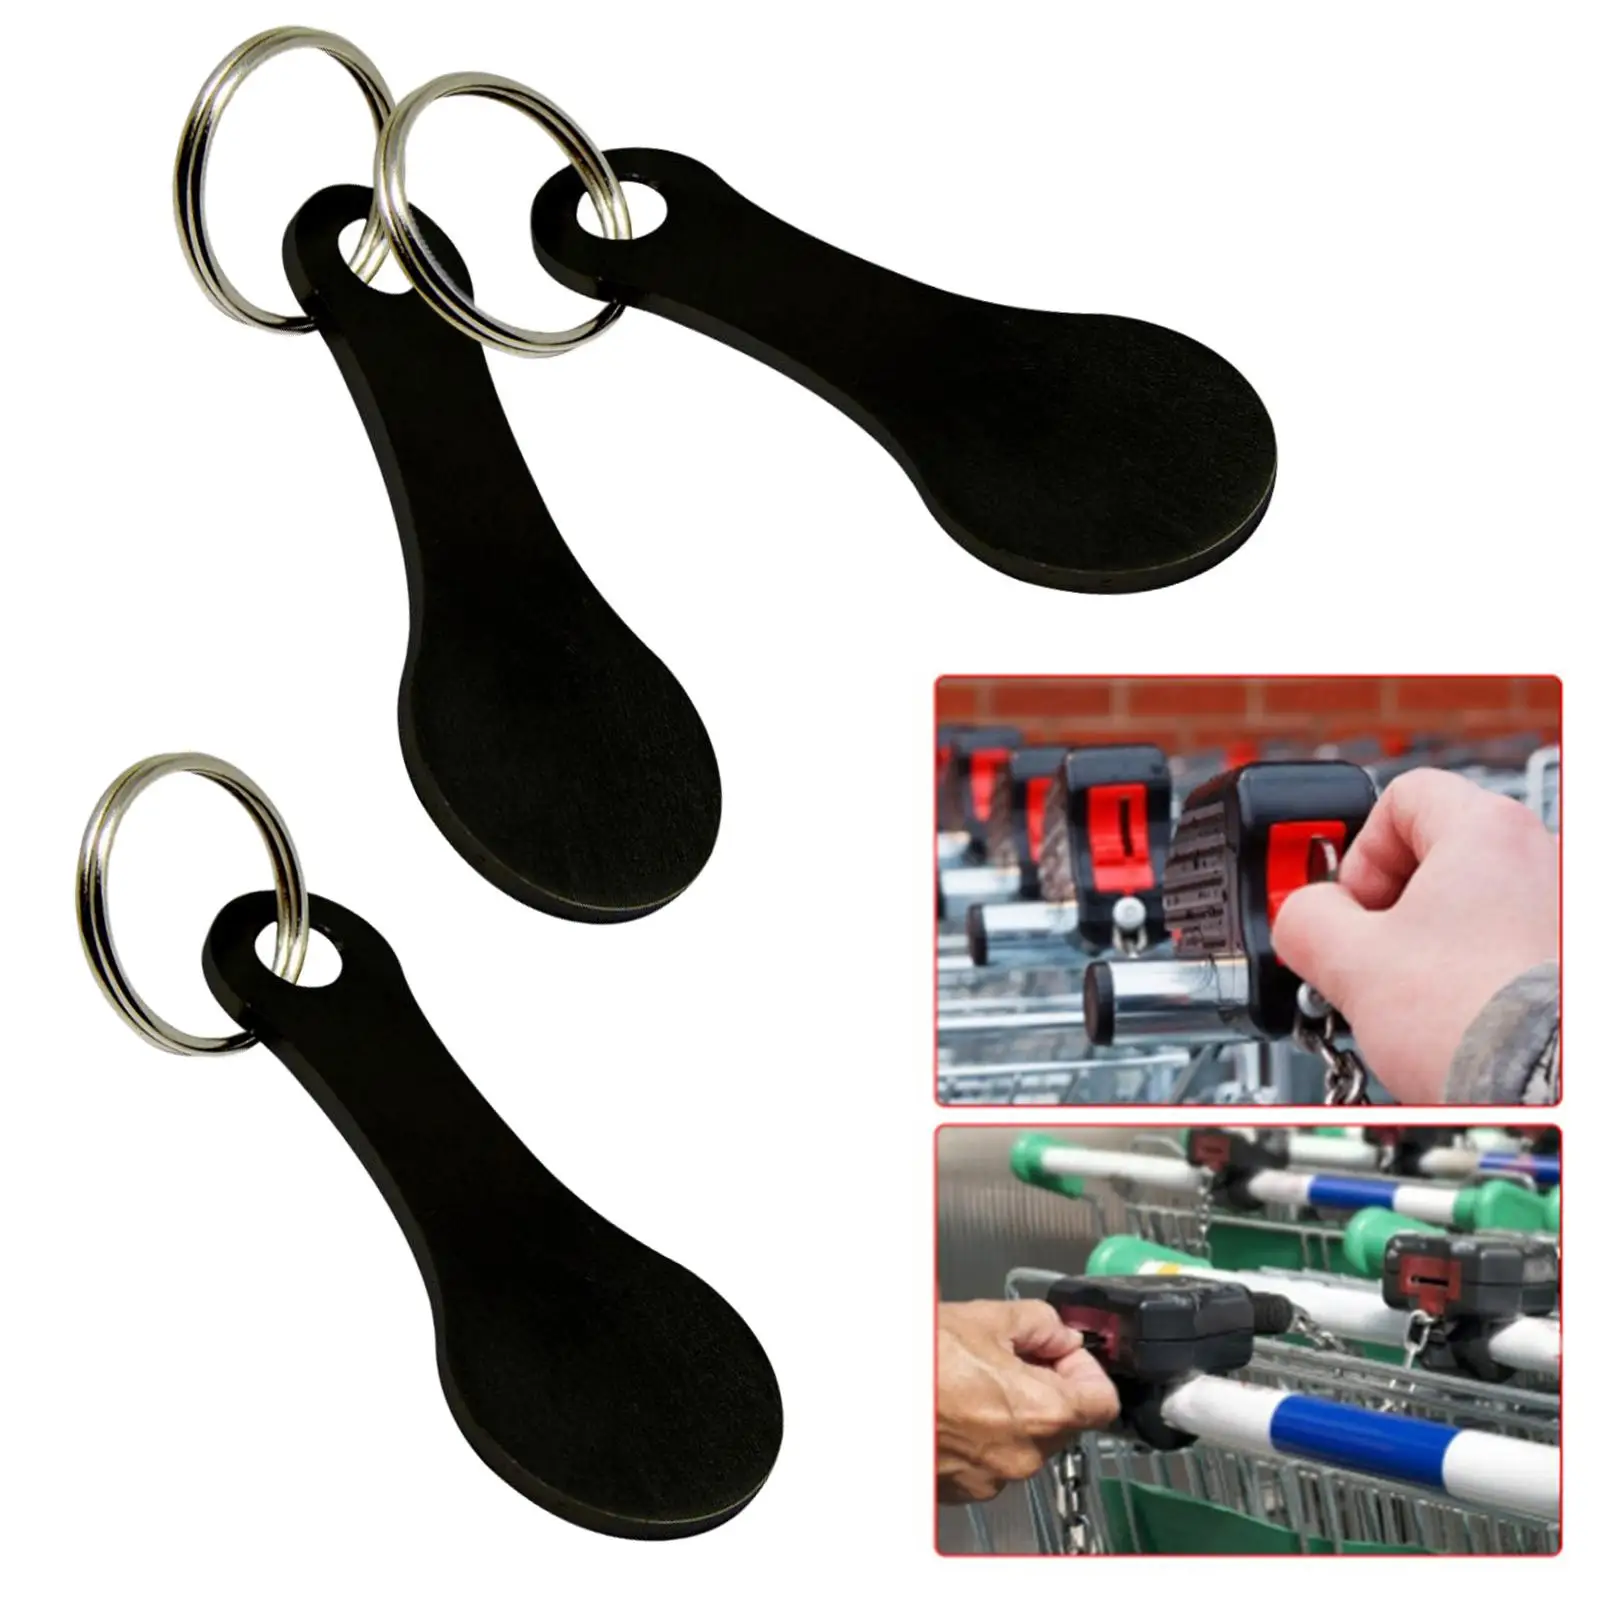 3x Shopping Trolley Tokens Release Keys Lightweight Portable Stable Black Keyrings for Coin Holder Grocery Cart Decor Bracelet